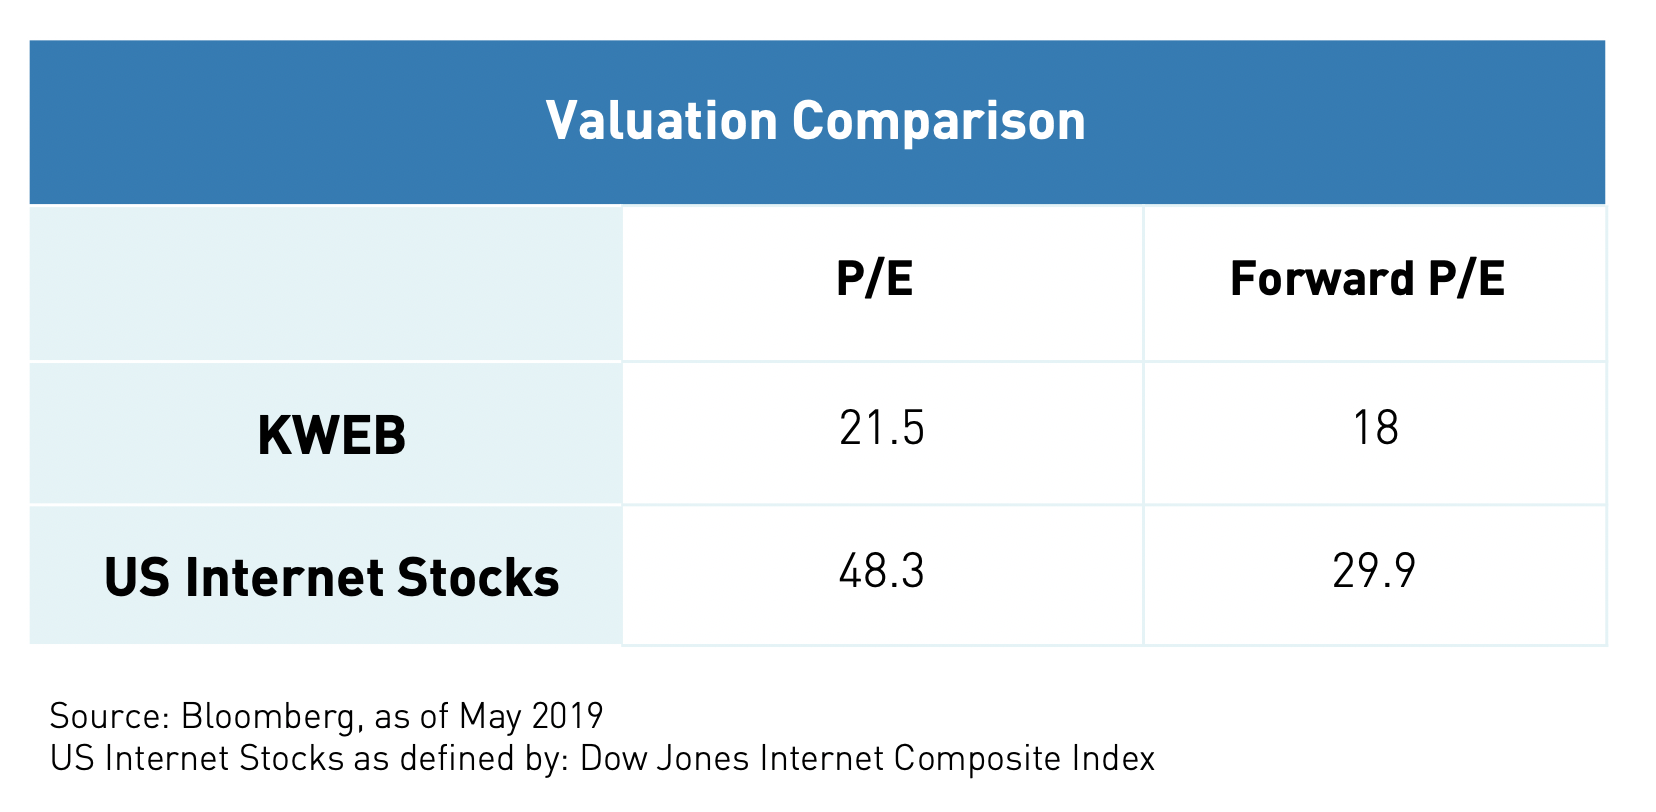 Valuation Comparision